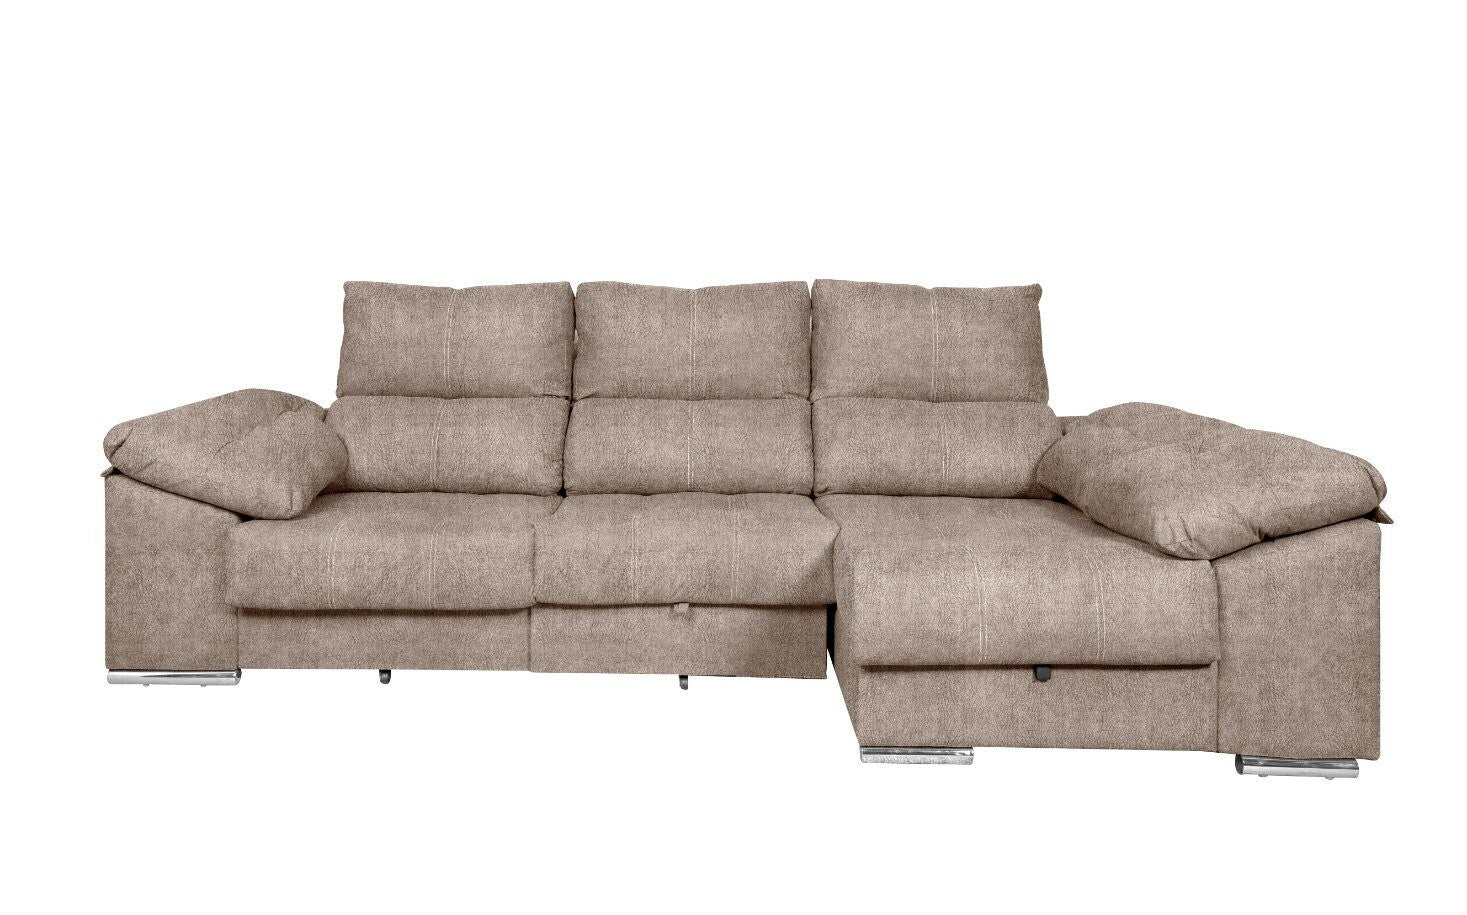 Sofa Cama Chaise Longue 275cm. Reclinable, con Arcon +2 pufs